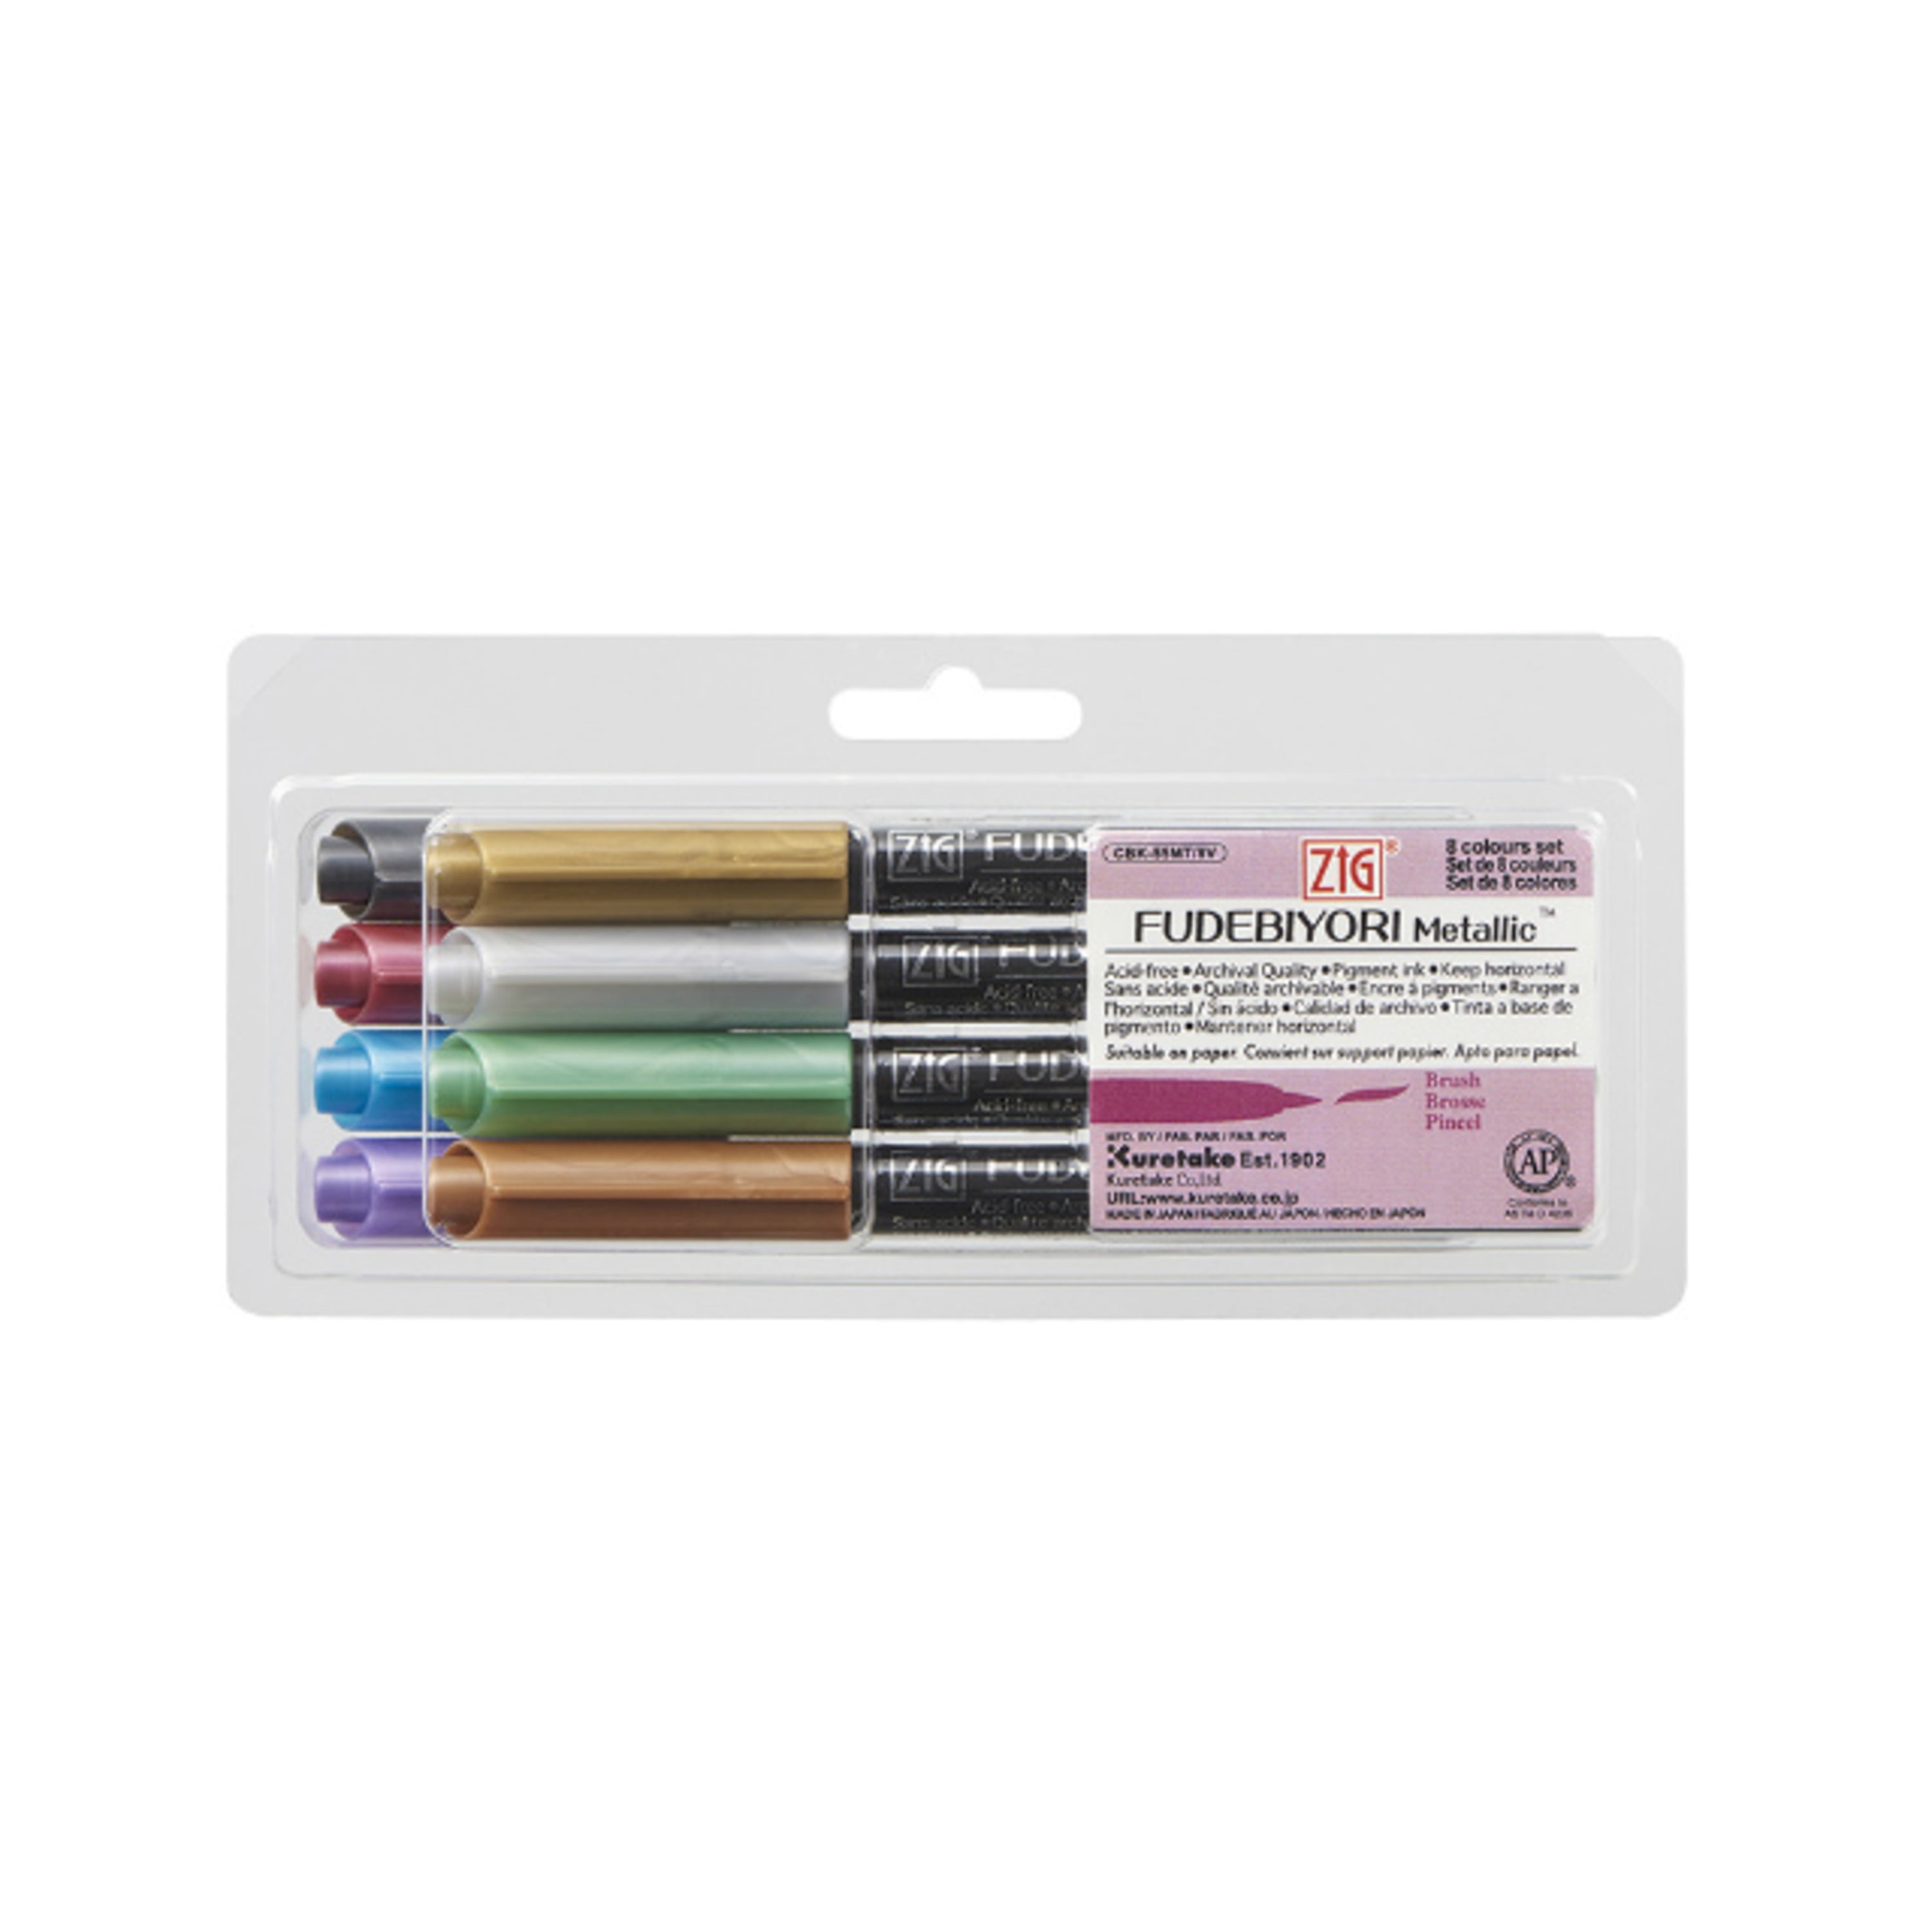 Zig Fudebiyori Brush Pen Set- Jewel Colors